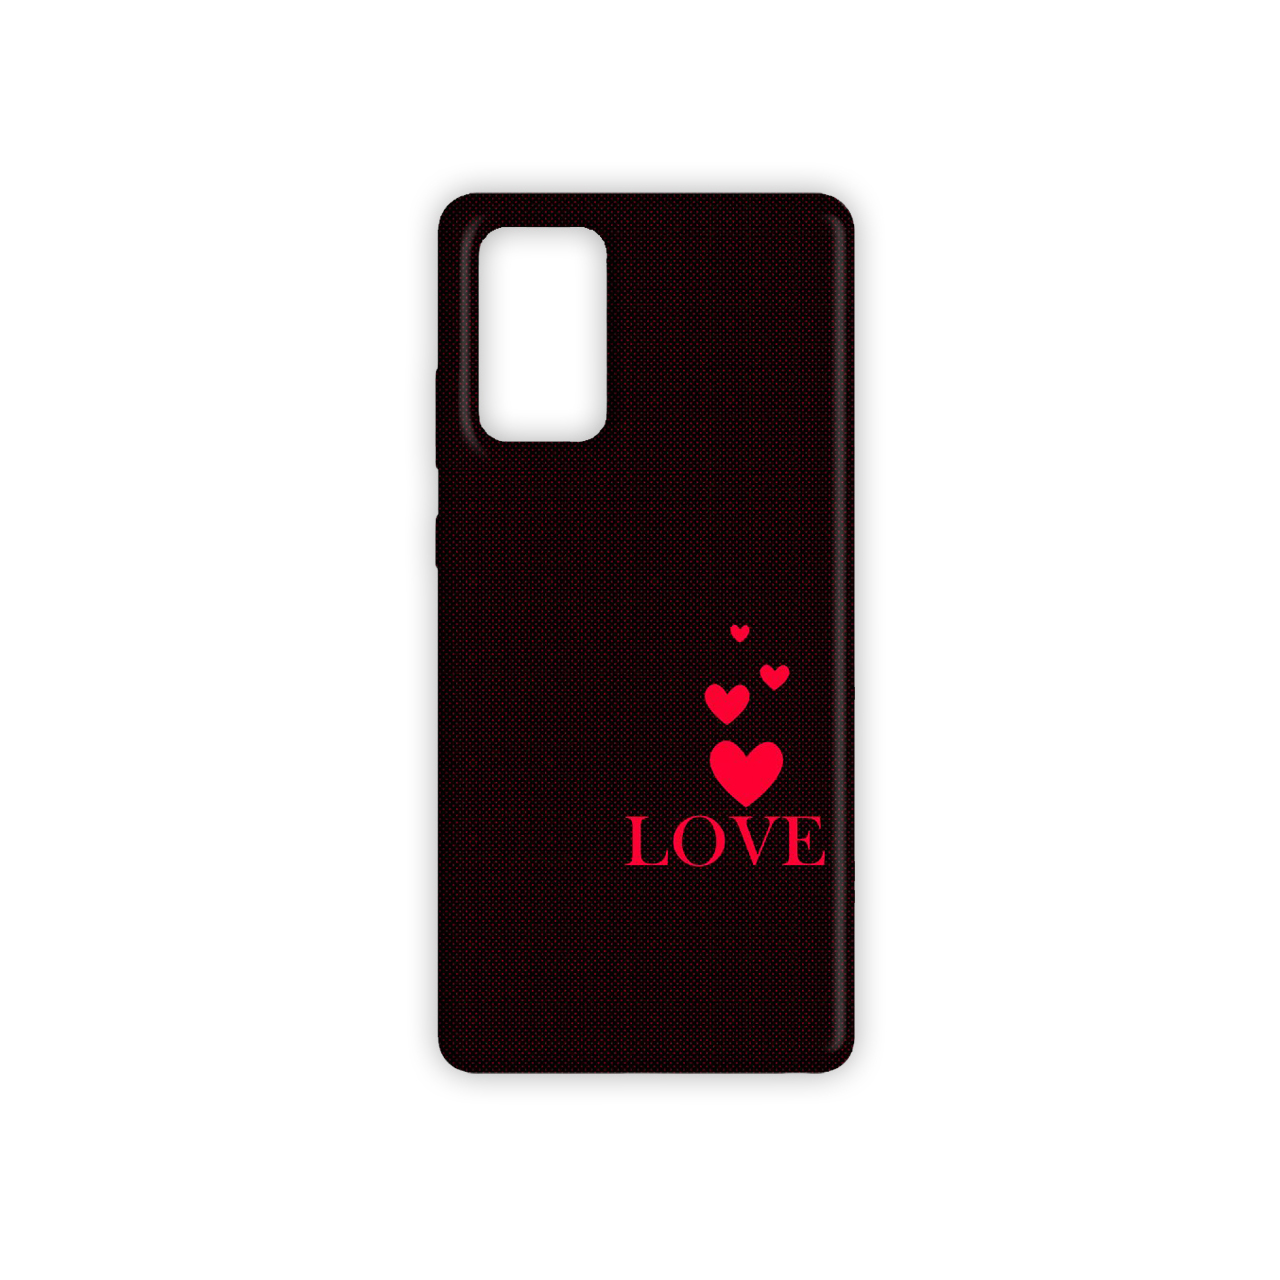  کاور skin مدل LOVE کد 384 مناسب برای گوشی موبایل سامسونگ galaxy a14